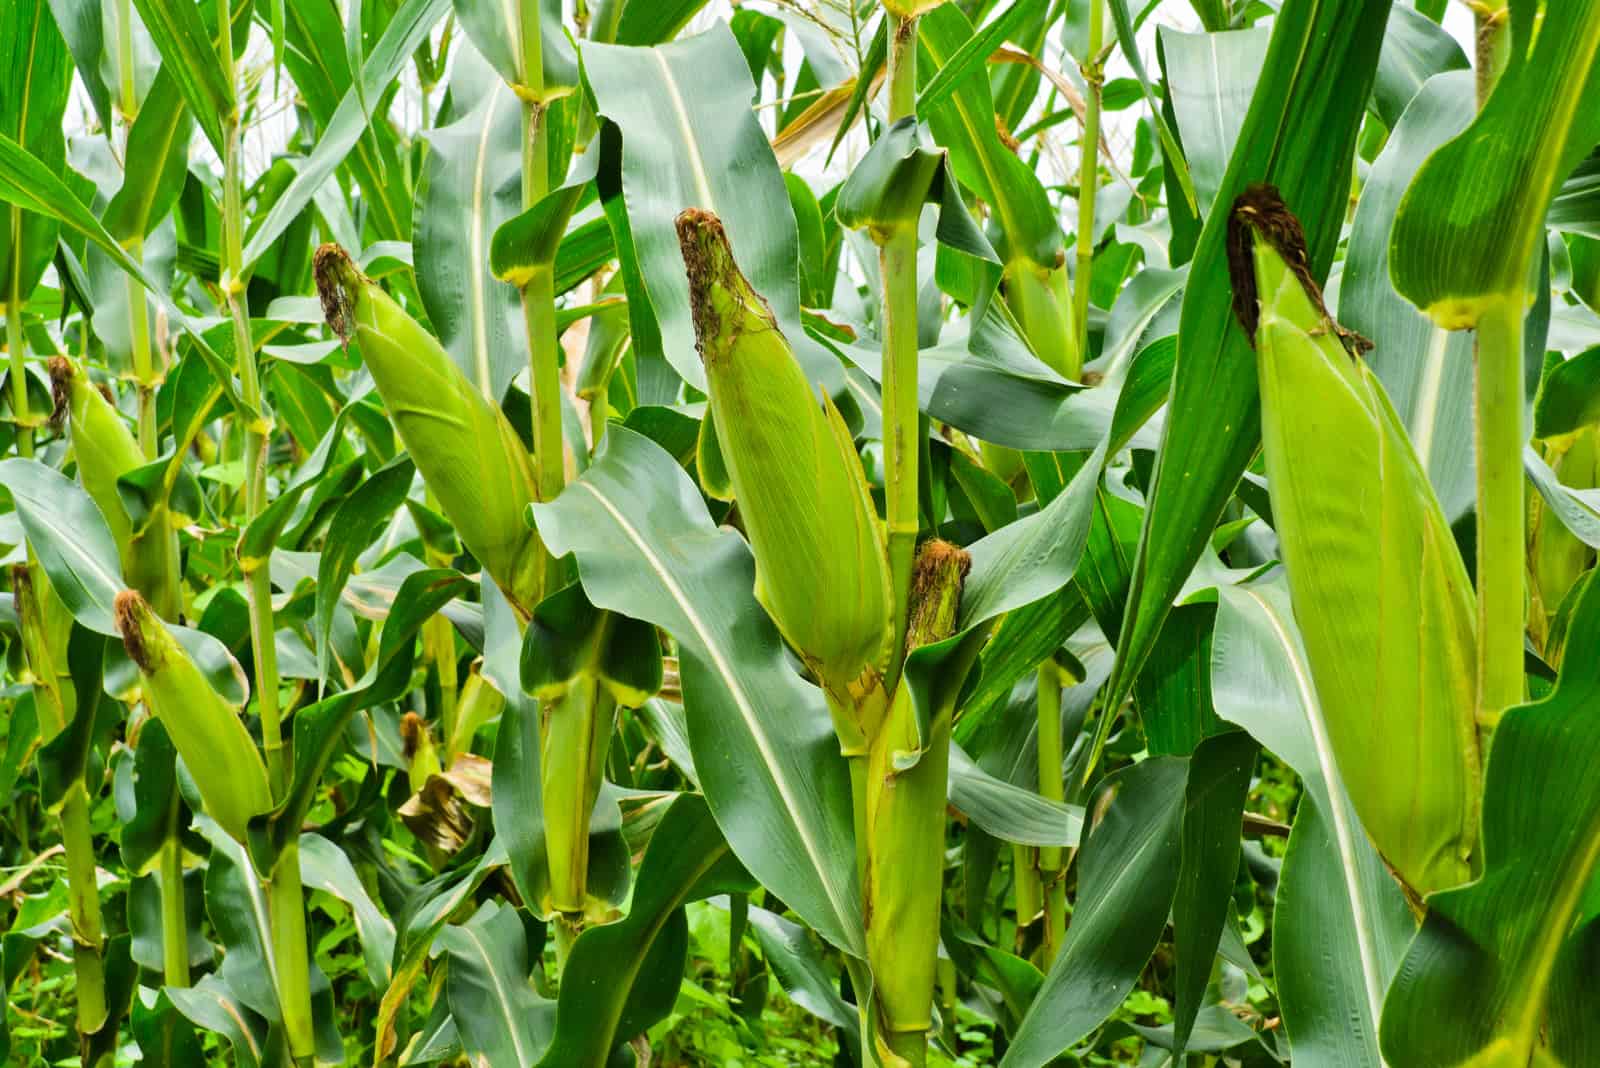 Corn harvest time